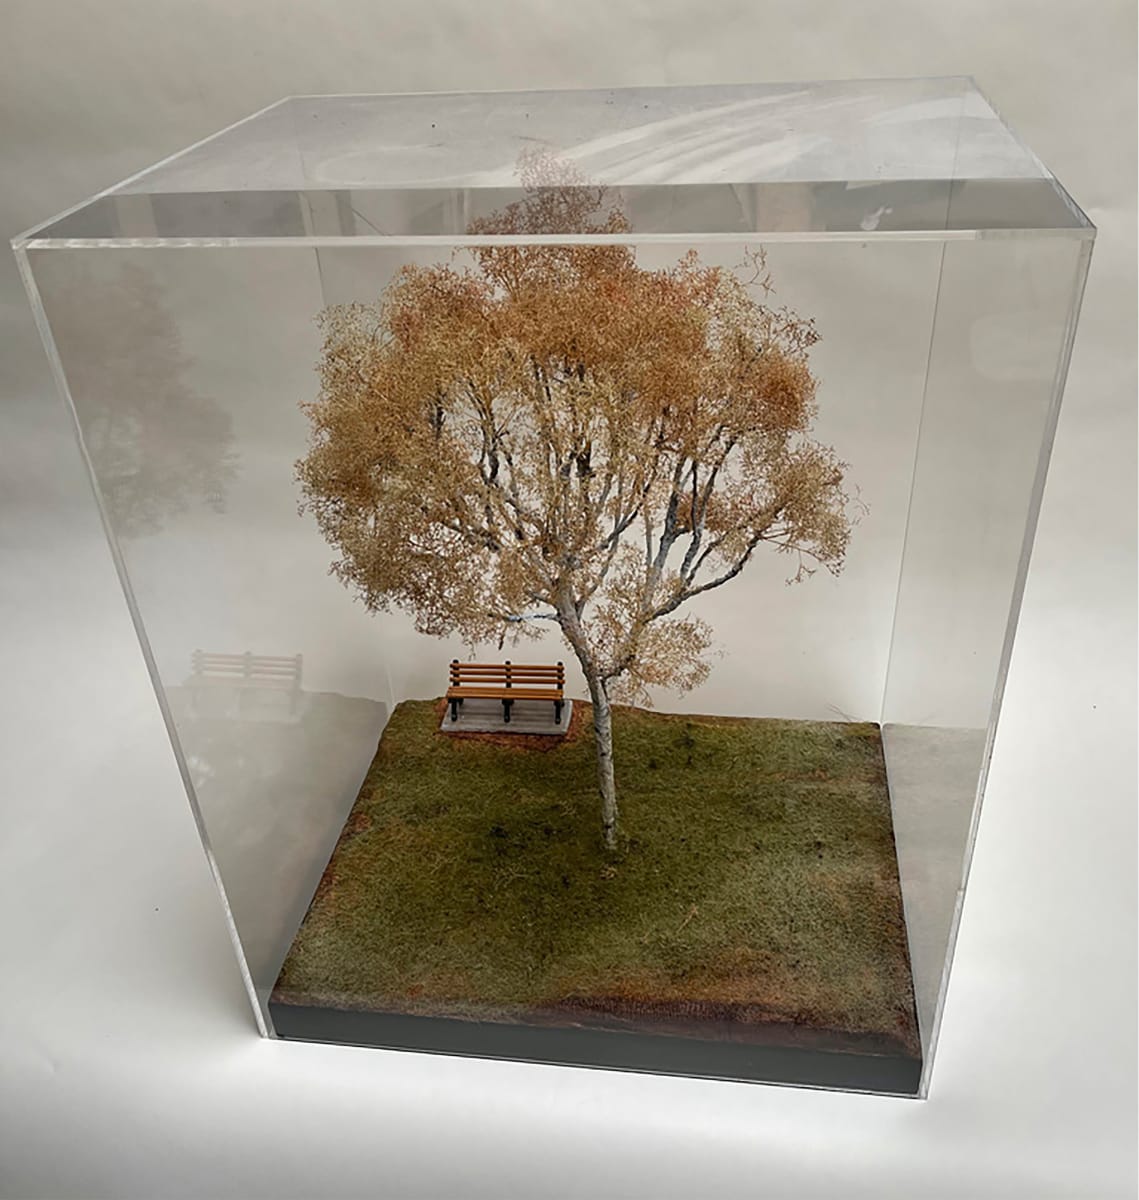 Birch tree in Plexi case by Gary Polonsky 